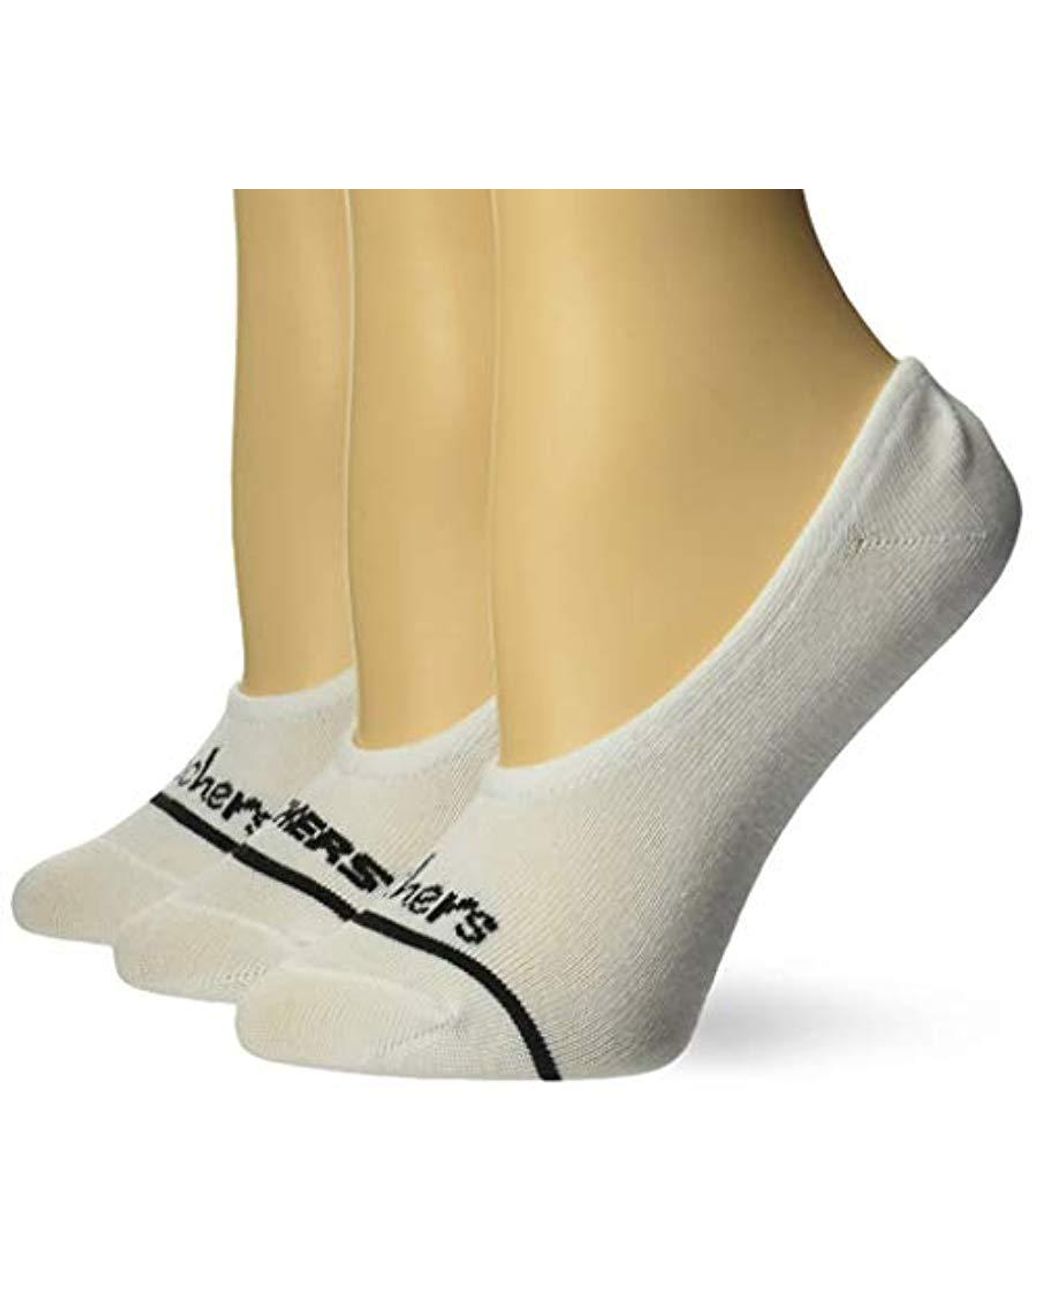 skechers active liner socks